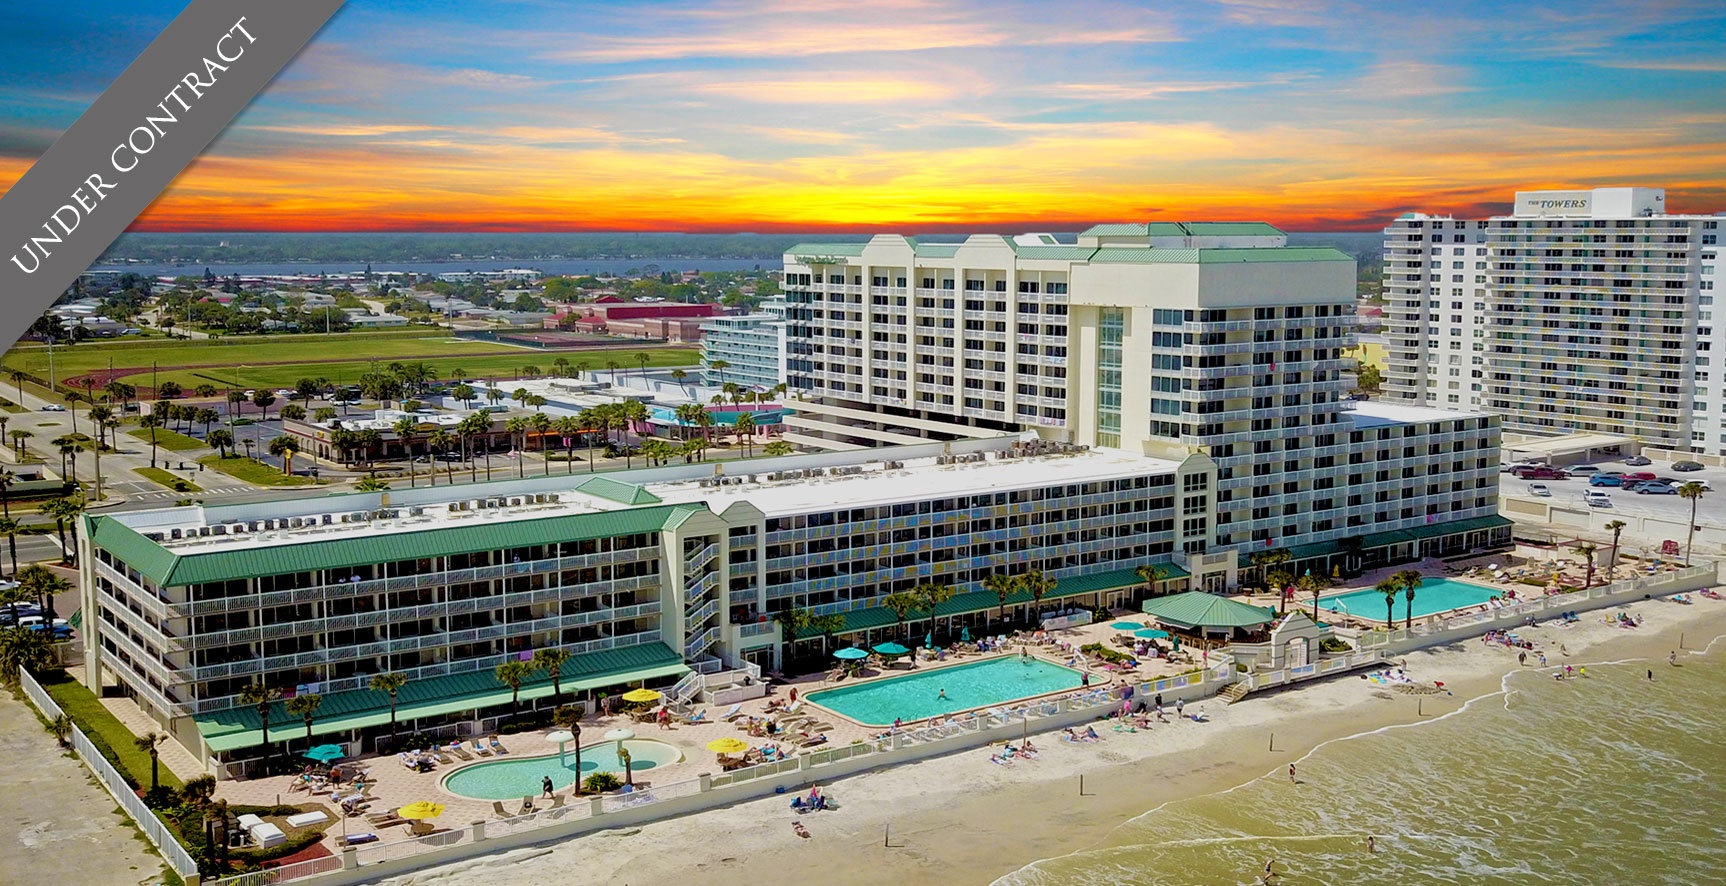 Daytona Beach Resort oceanfront condos For Sale at 2700 N Atlantic Ave Daytona Beach The LUXE Group 386-299-4043